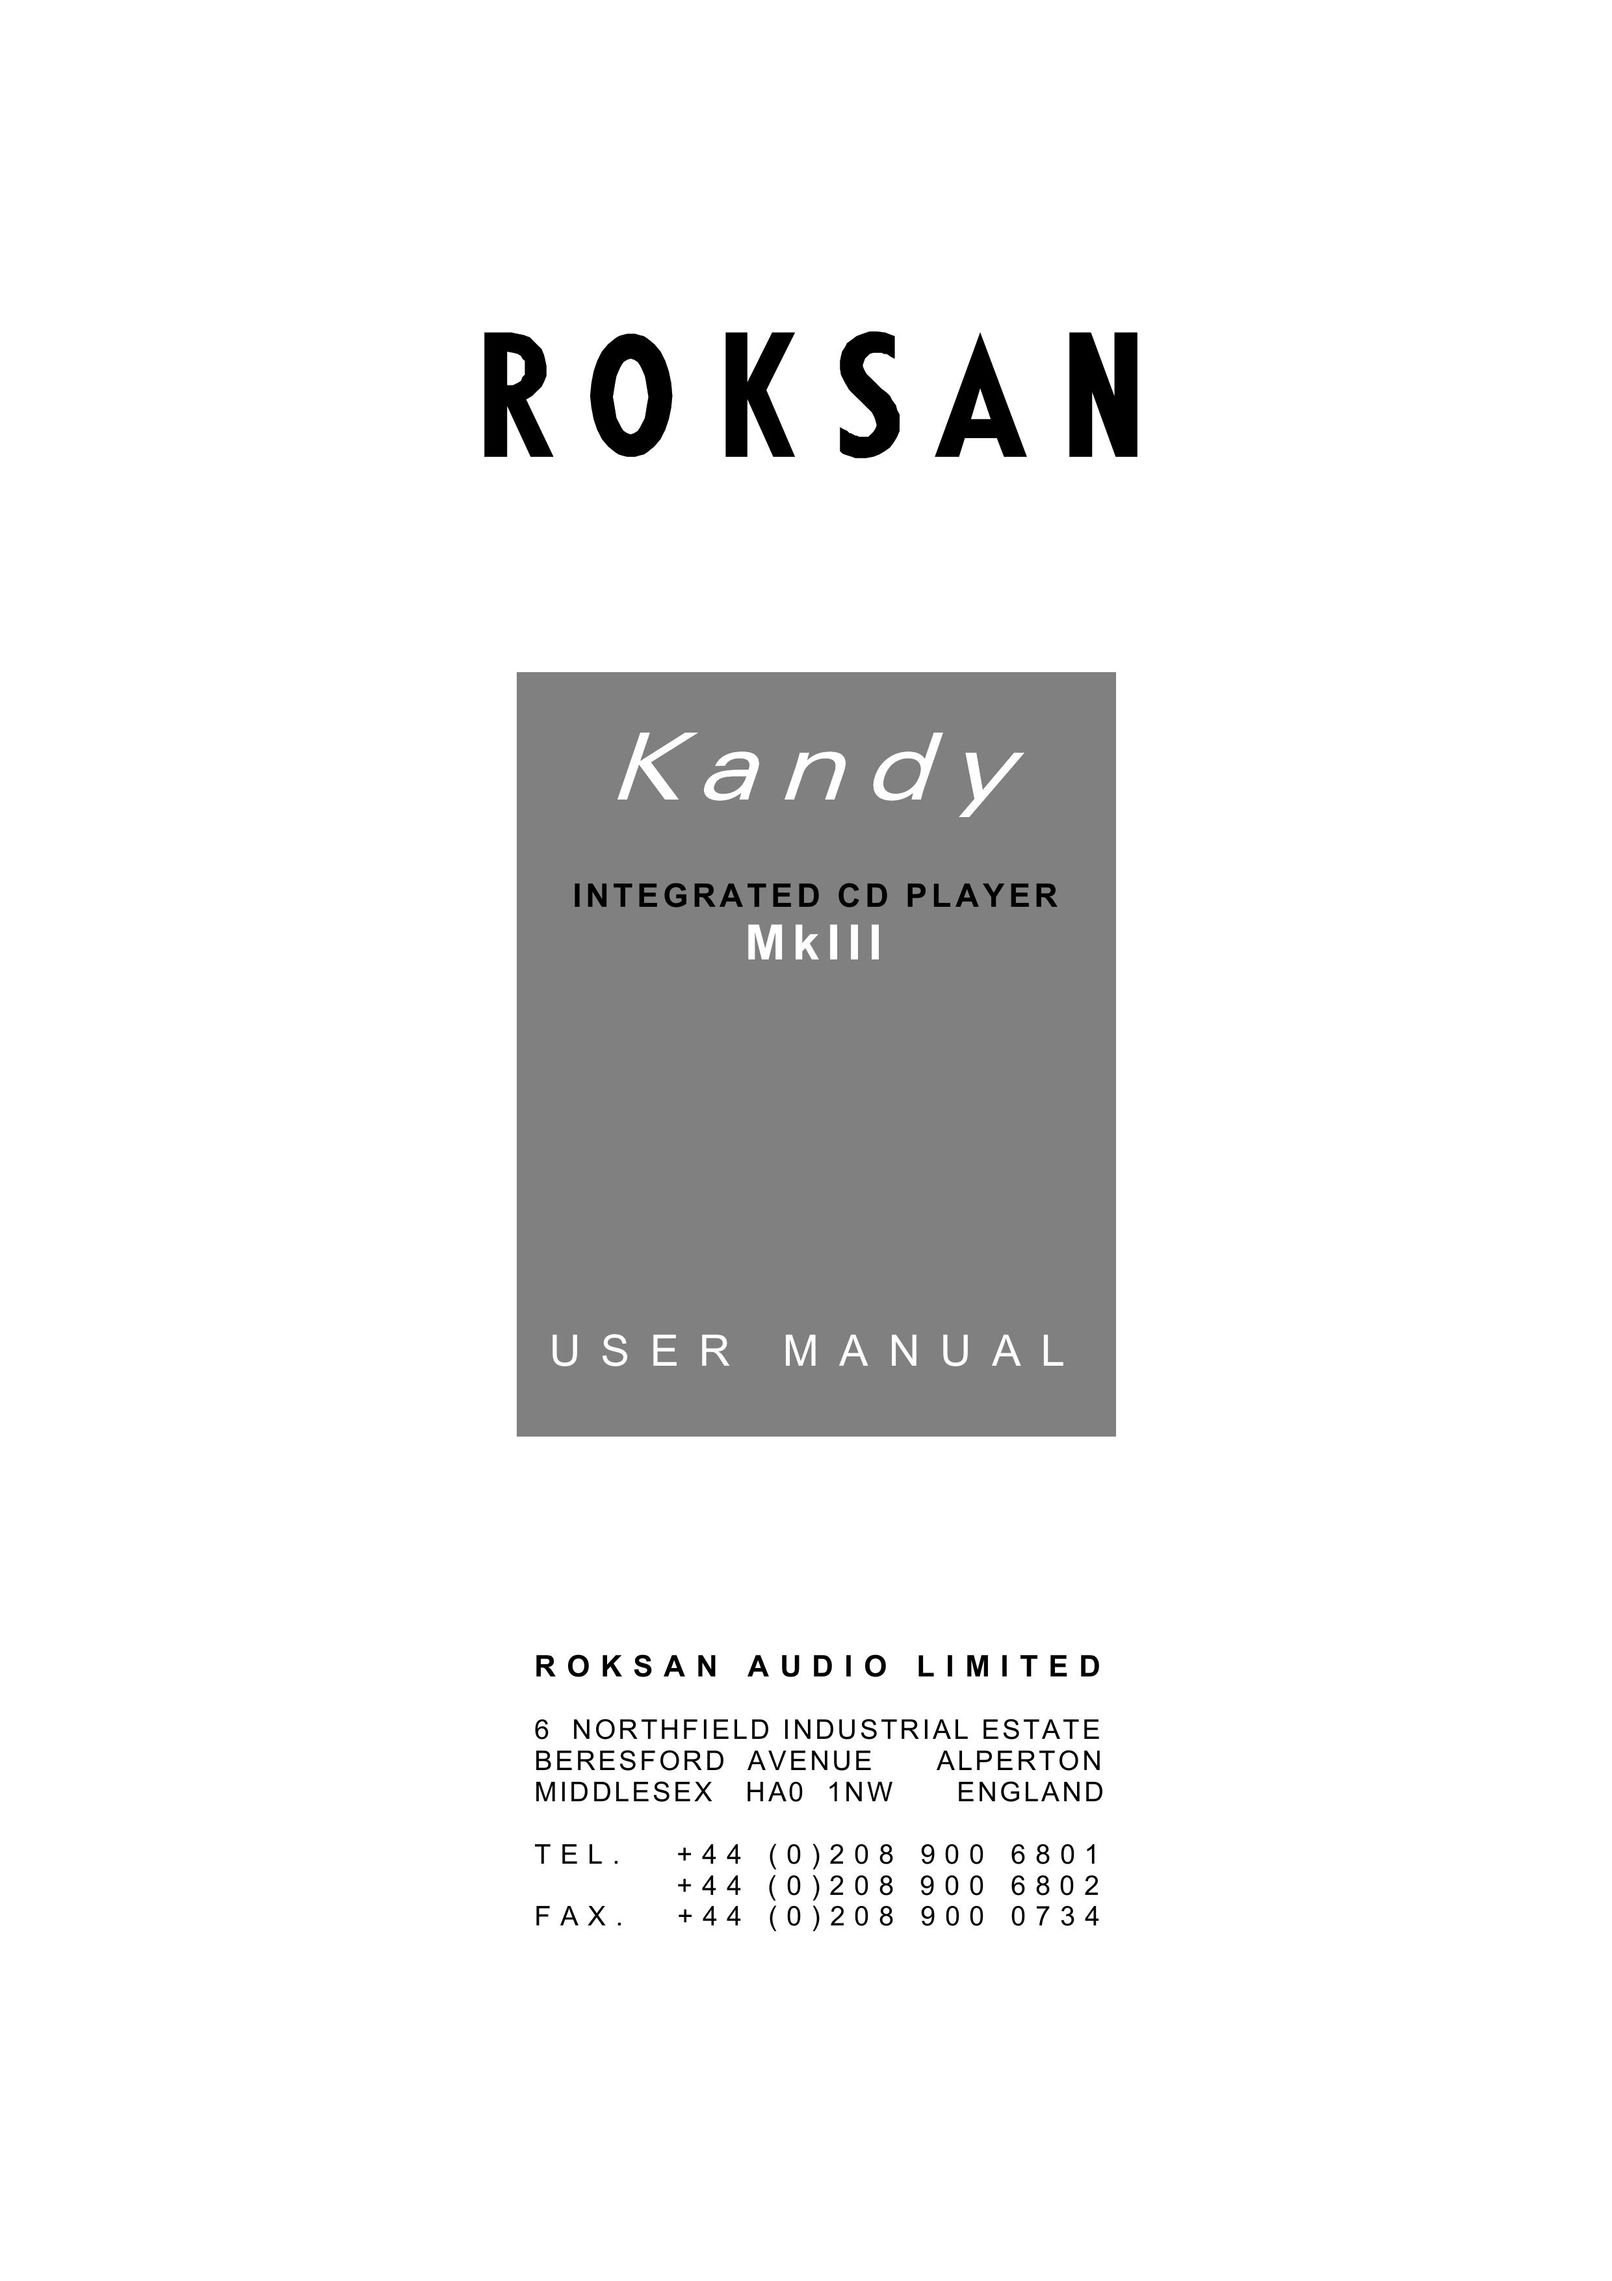 Roksan Audio Kandy MkIII CD Player User Manual